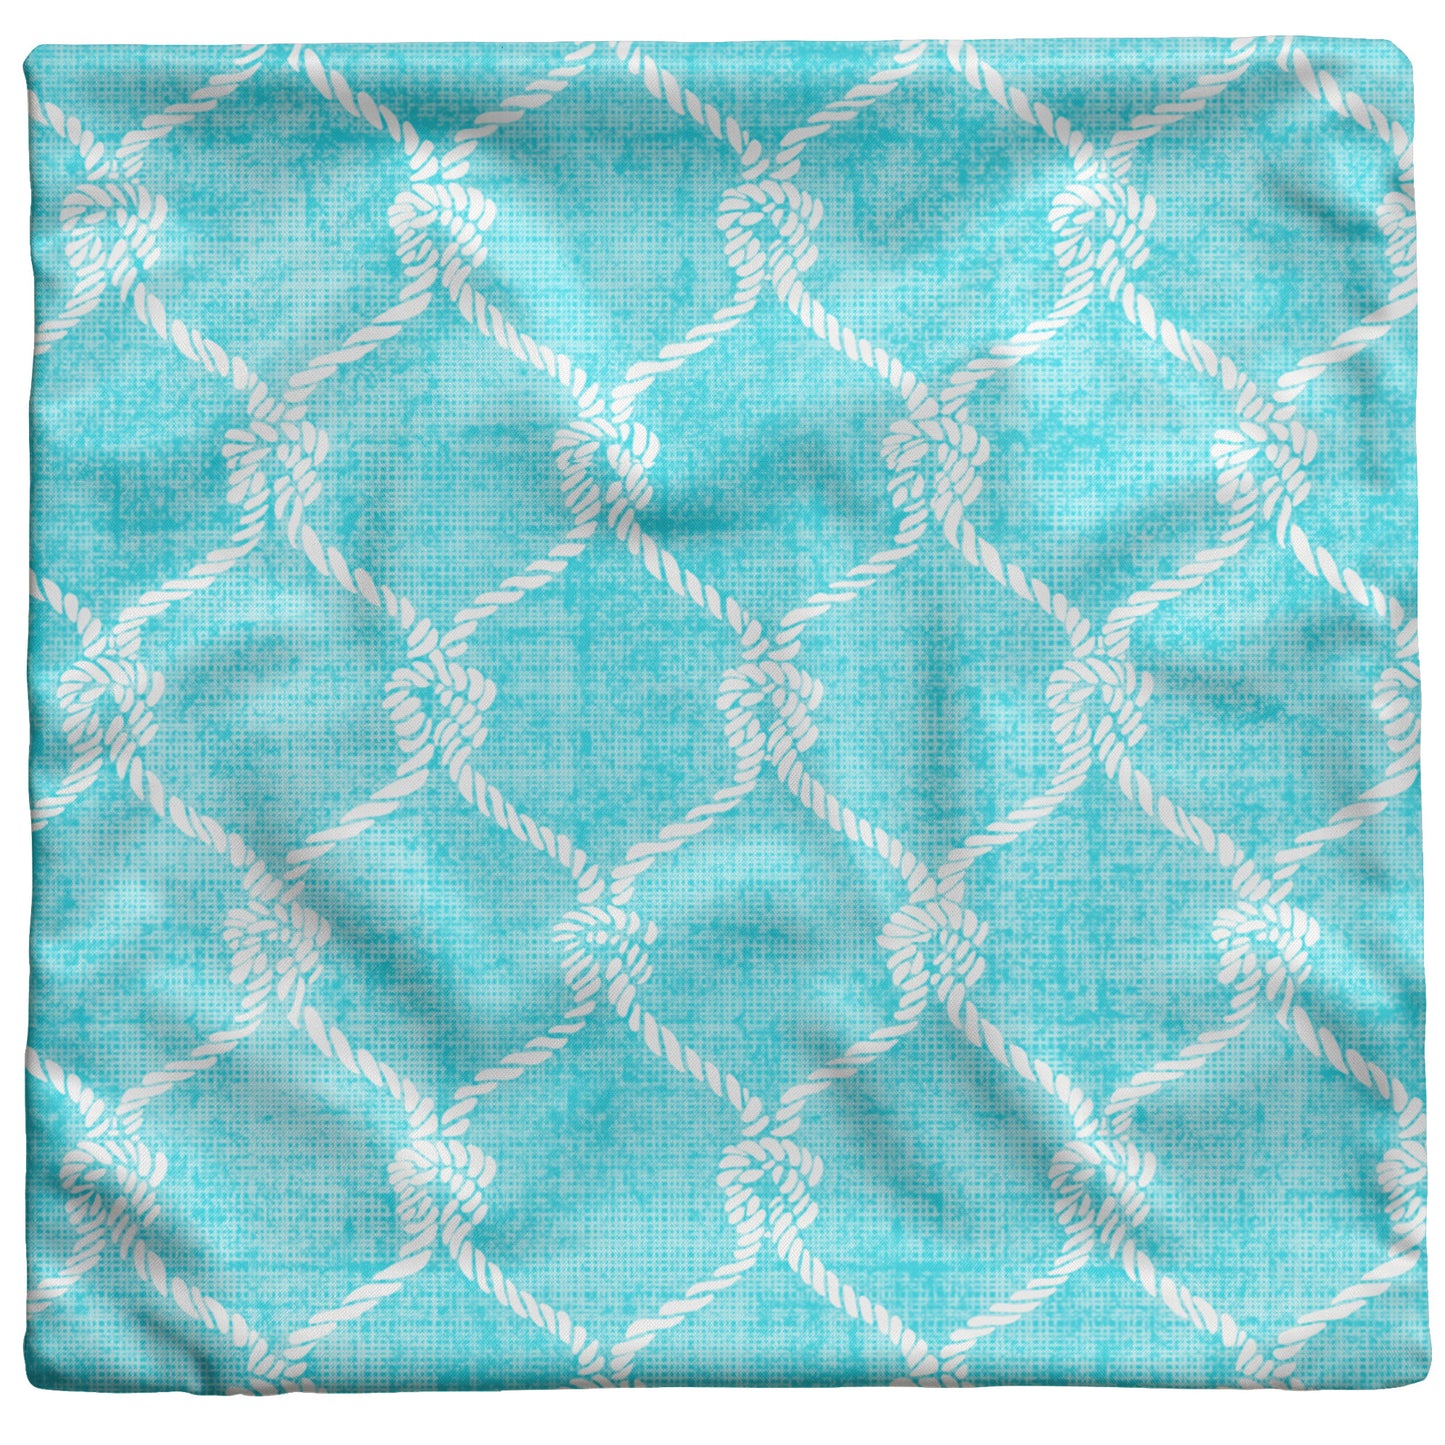 Nautical Netting Design on Tropical Blue Linen Textured Background, Throw Pillow